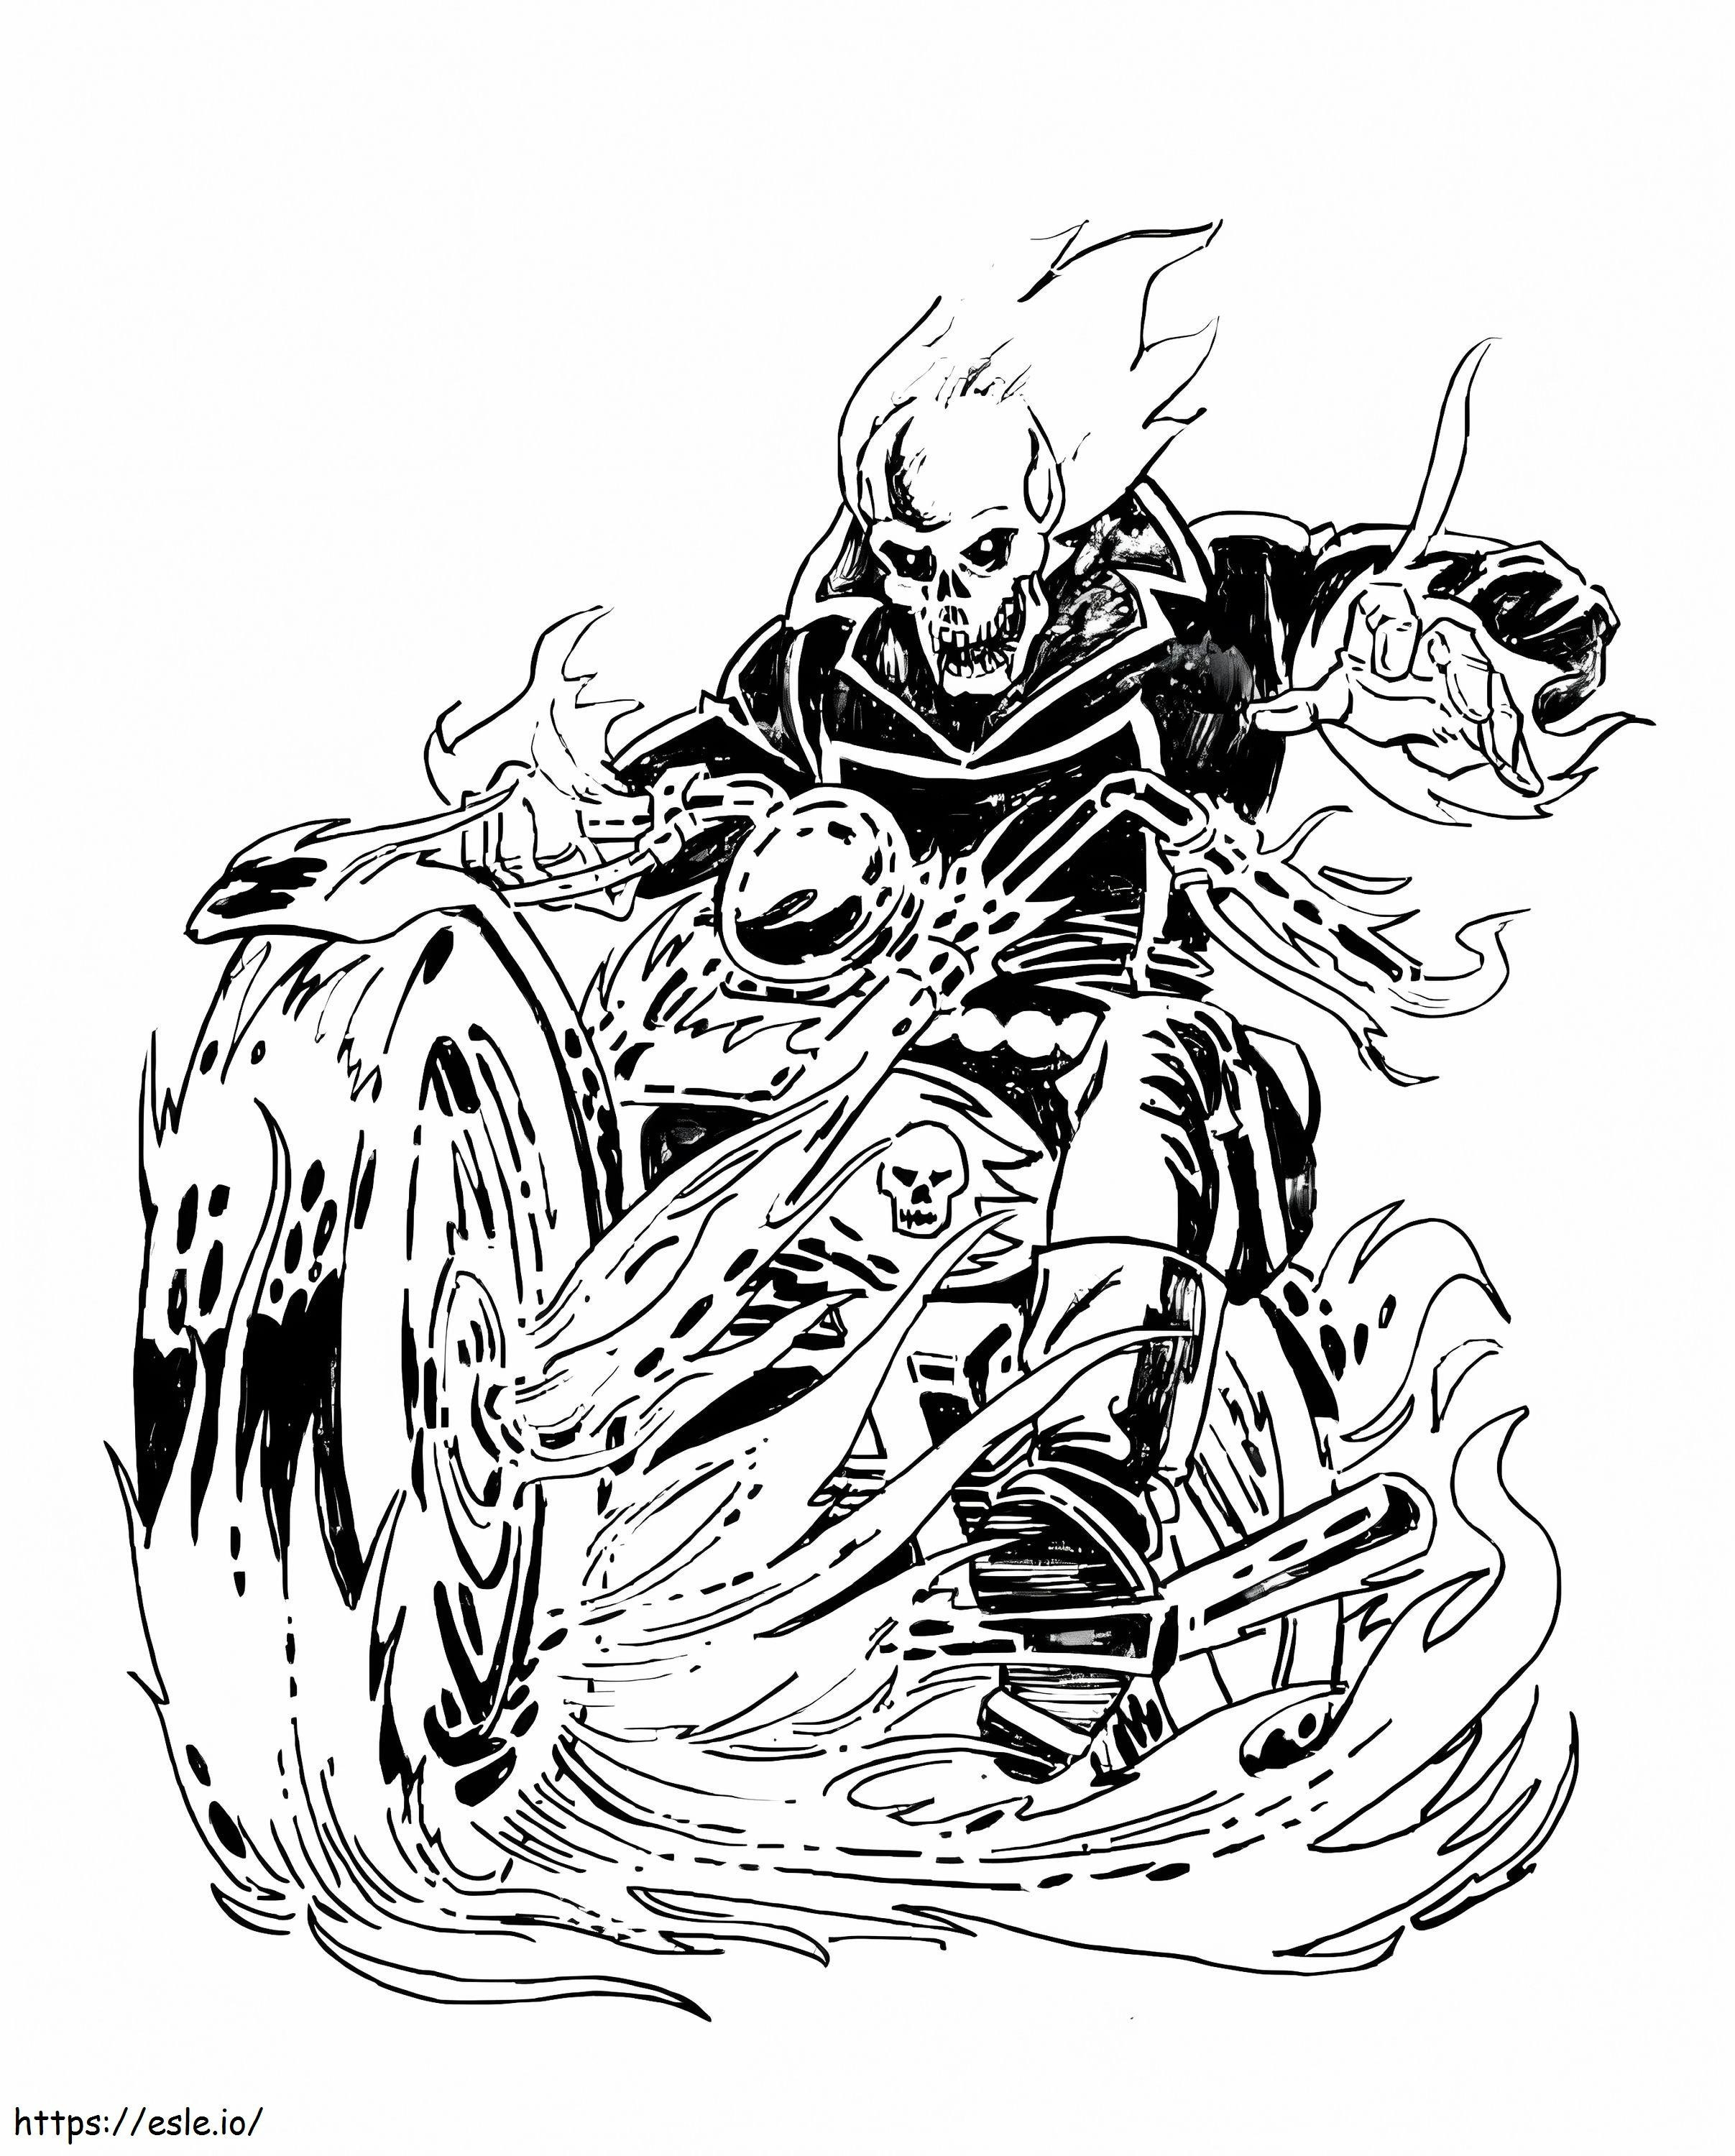 Cool Ghost Rider de colorat